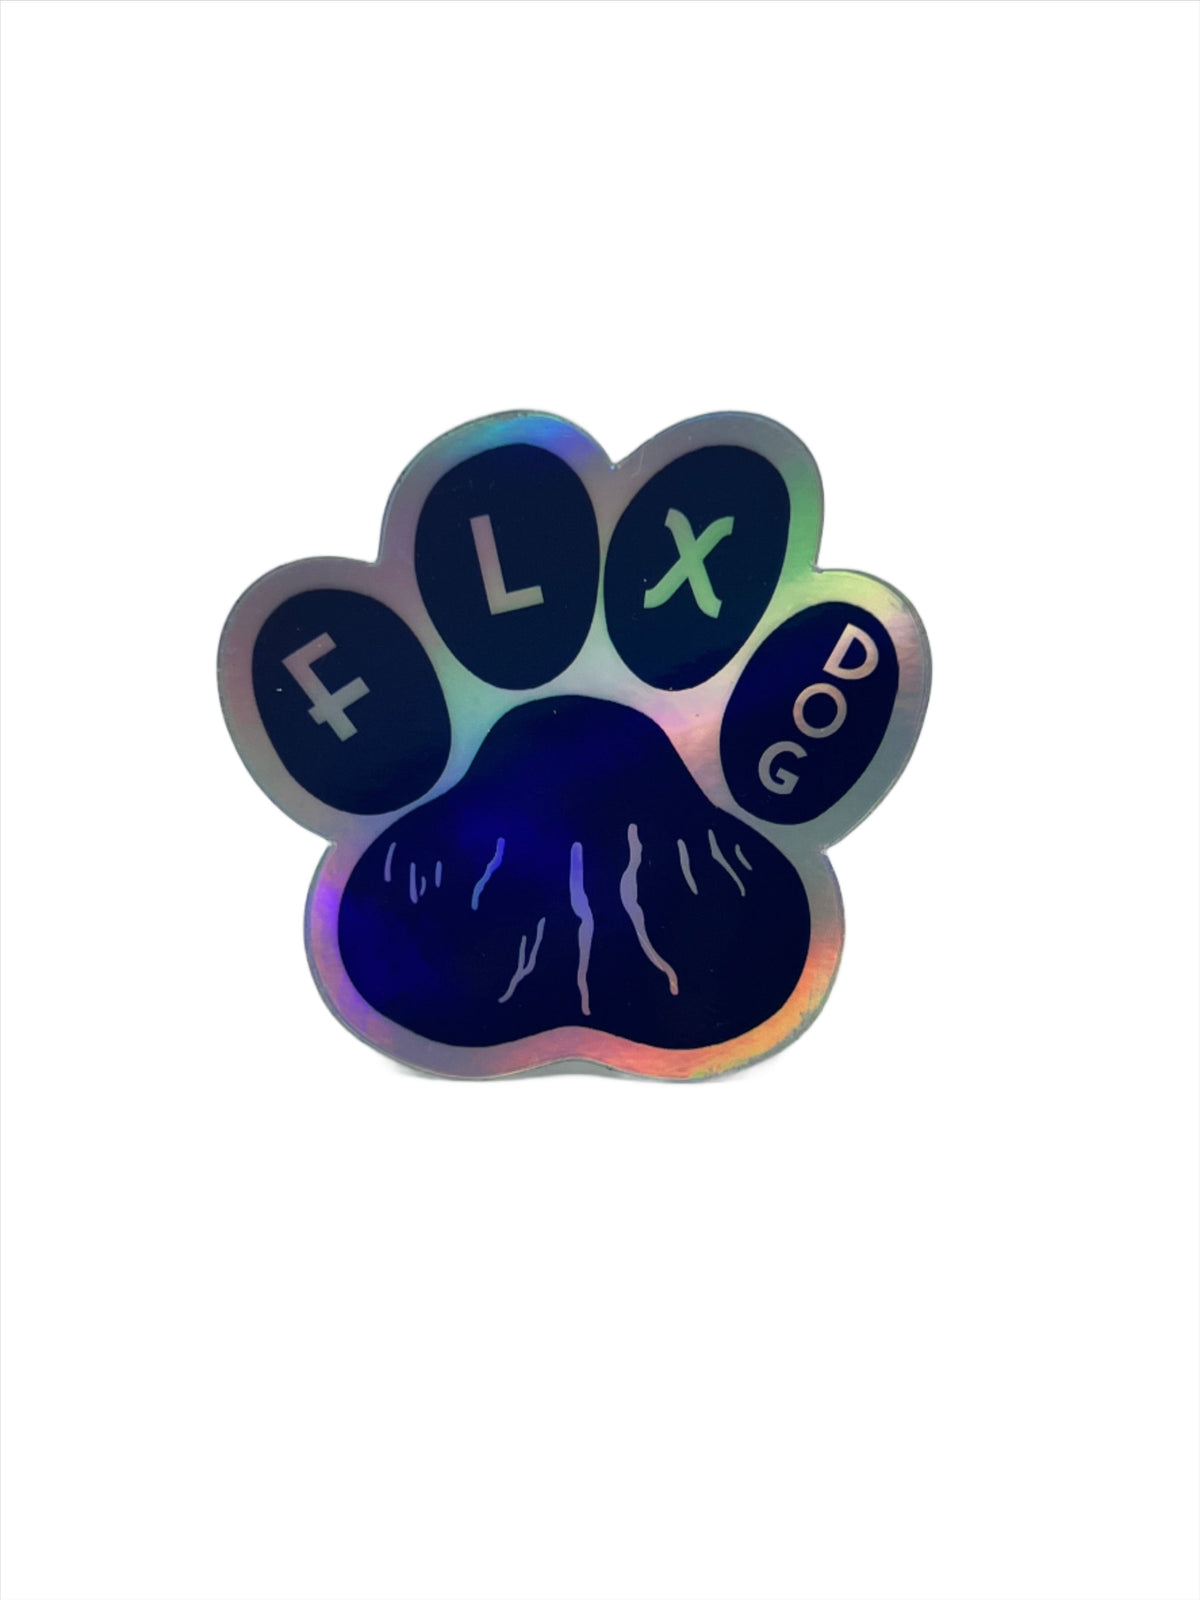 FLX Dog Holographic Vinyl Sticker